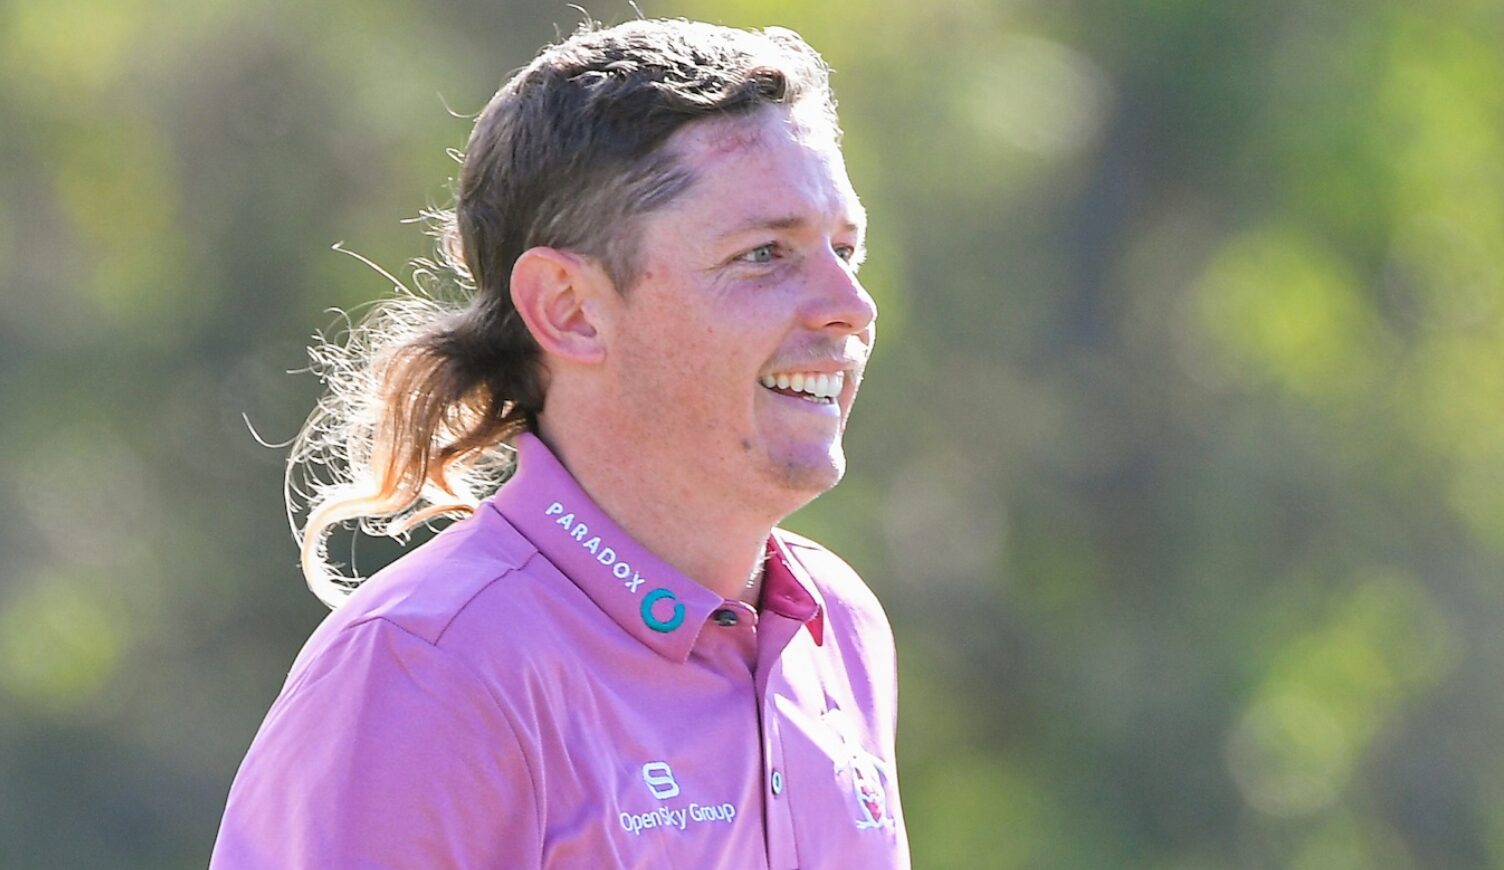 Cameron Smith, A Australian professional golferCourtesy:Compleat Golfer